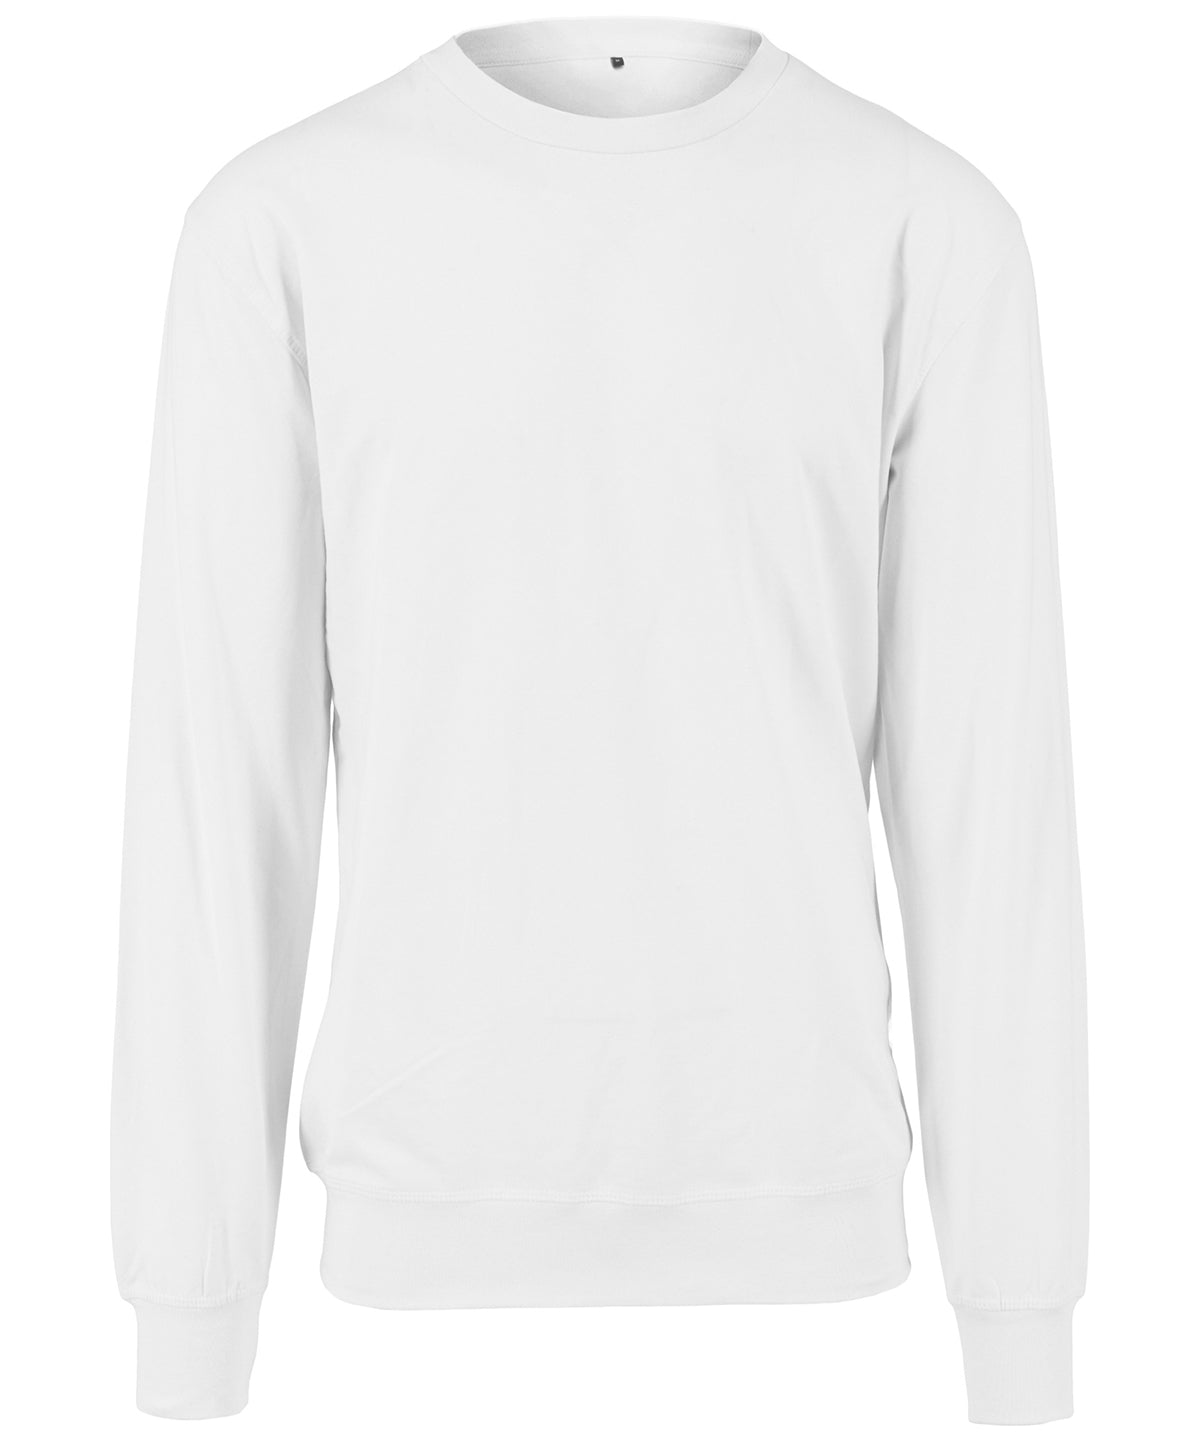 Personalised Sweatshirts - Dark Grey Build Your Brand Light crew sweatshirt